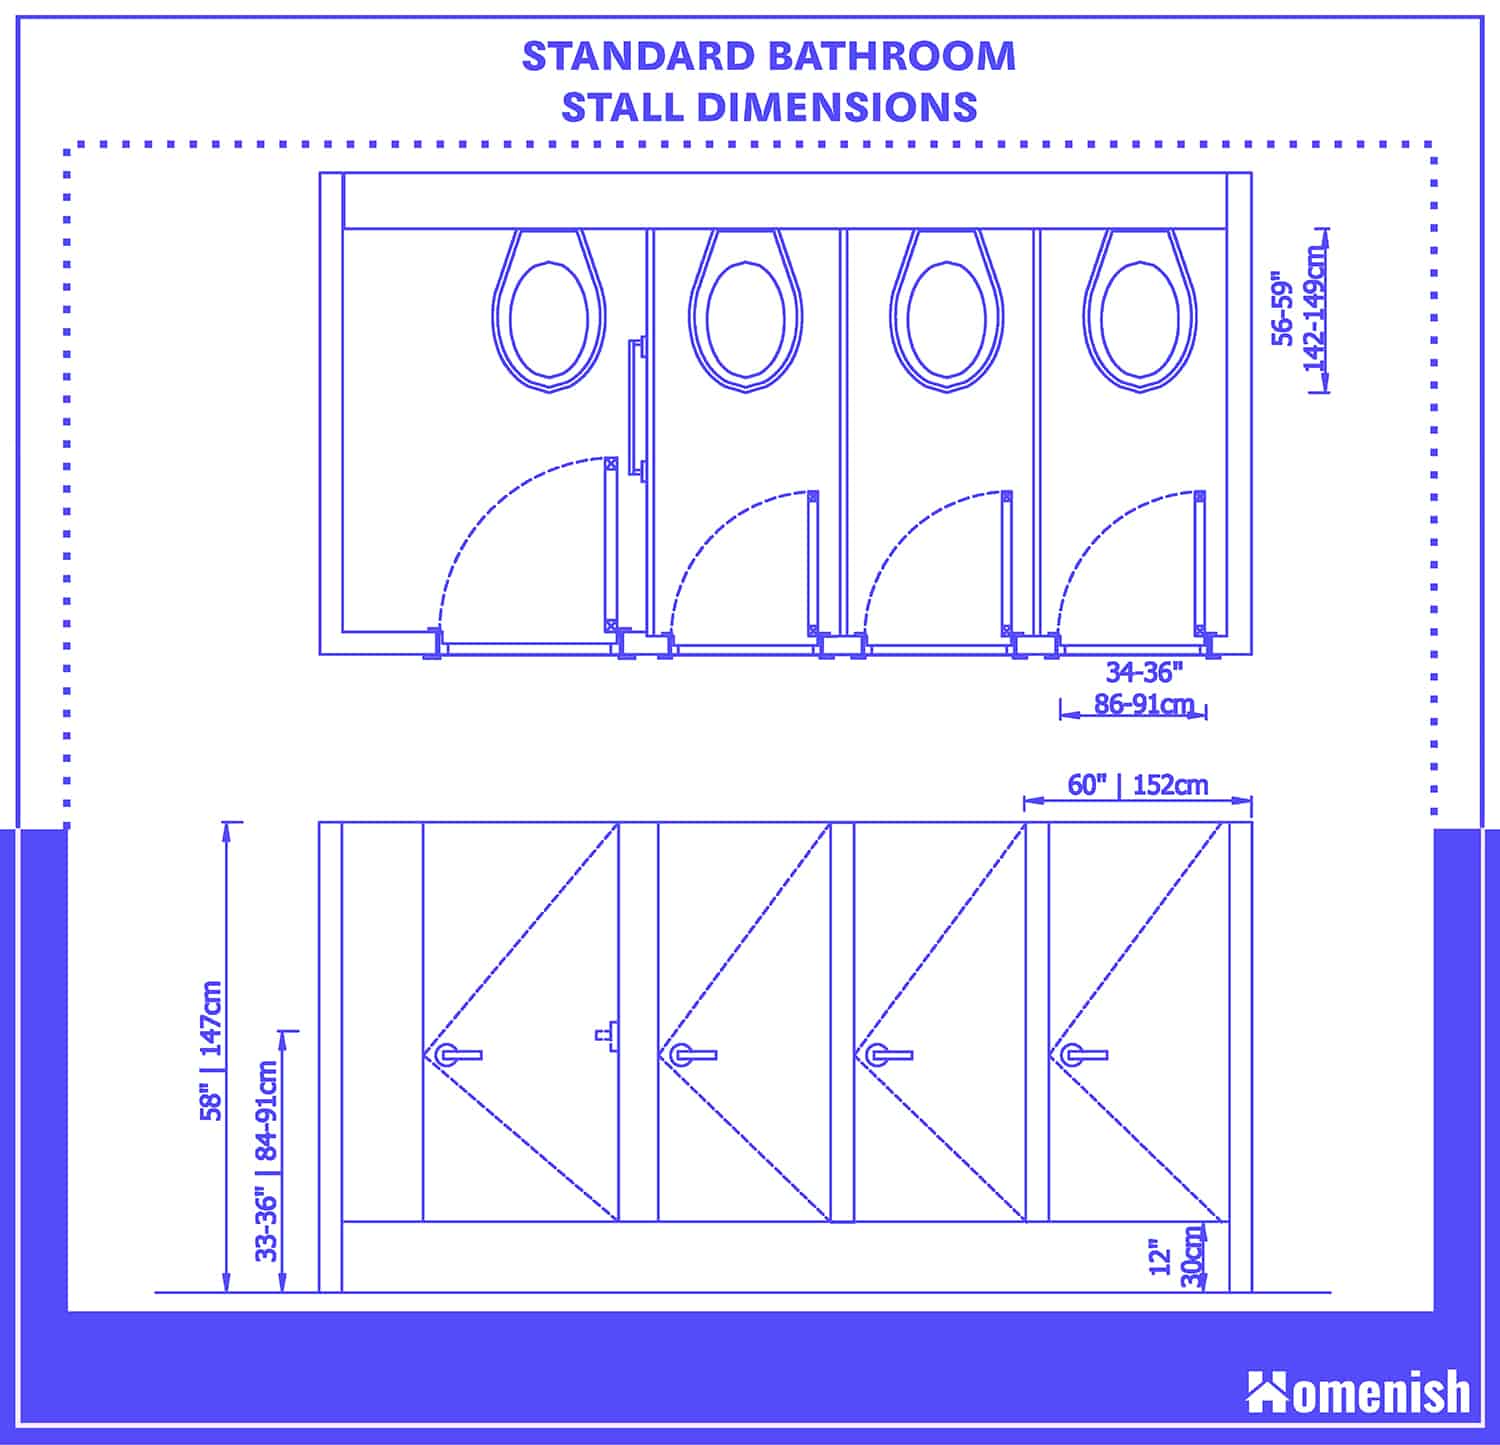 Standard Bathroom Stall Dimensions